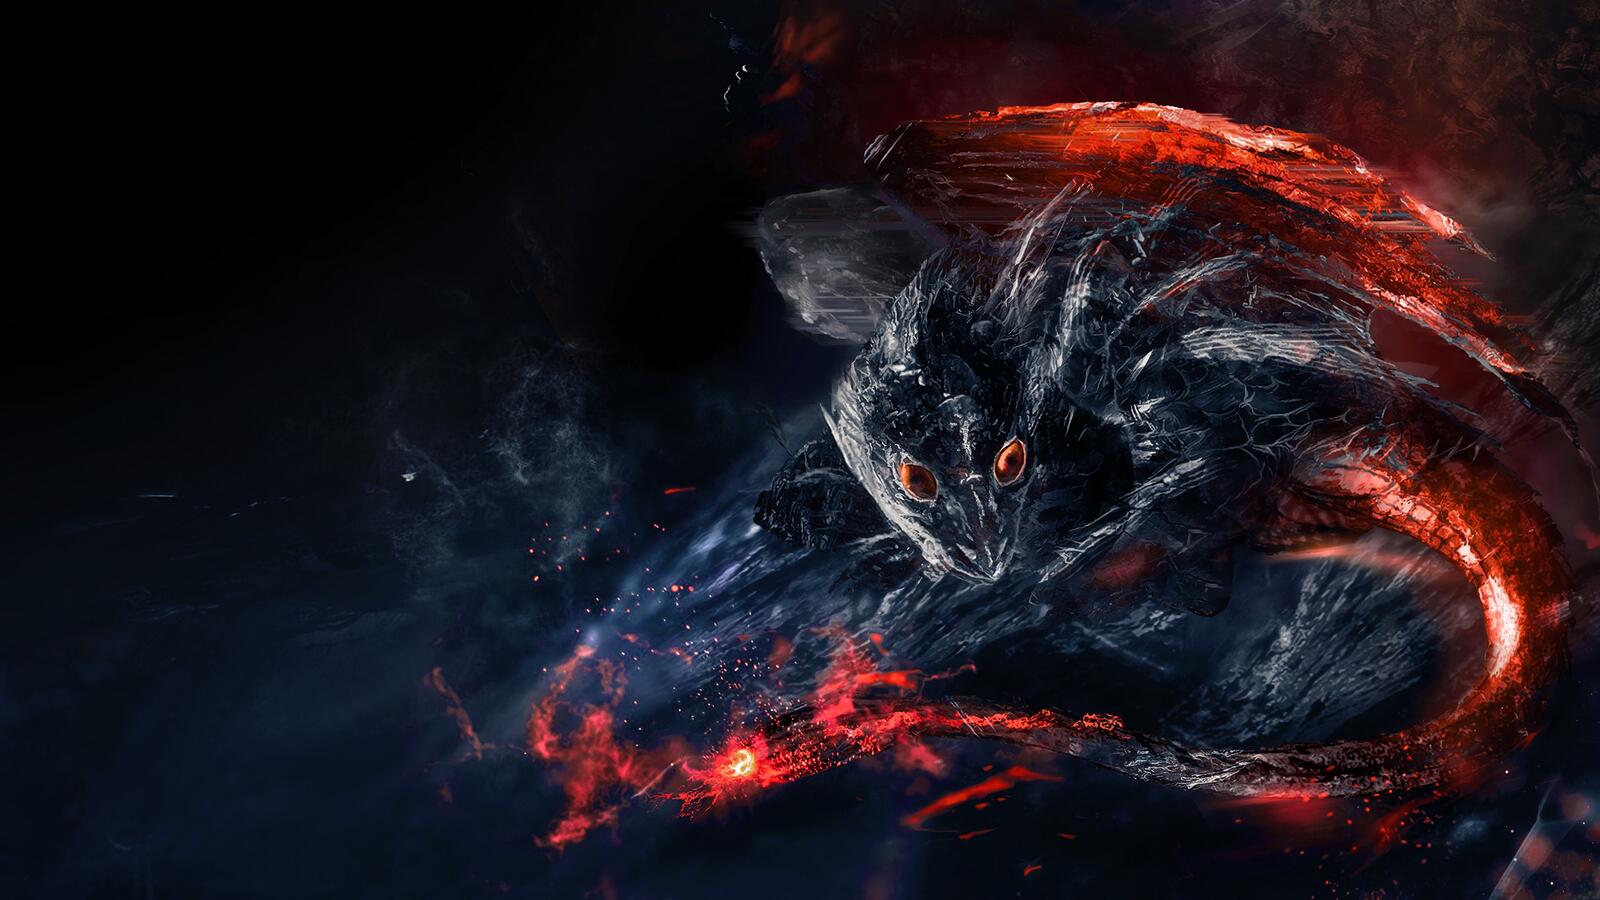 Wallpapers dragon flames fantasy creatures on the desktop